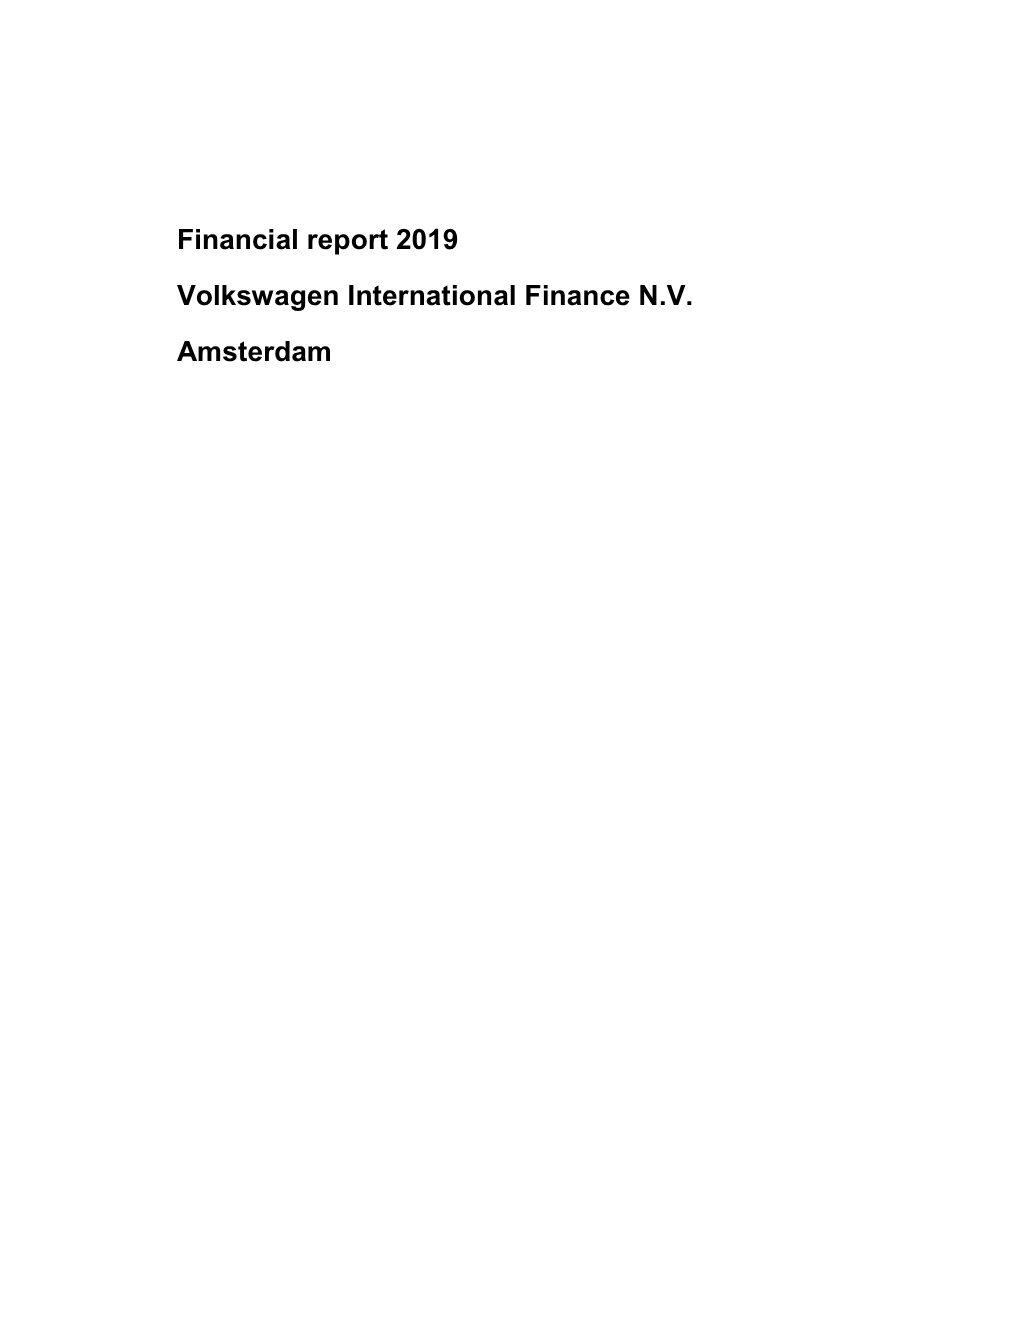 Financial Report 2019 Volkswagen International Finance N.V. Amsterdam